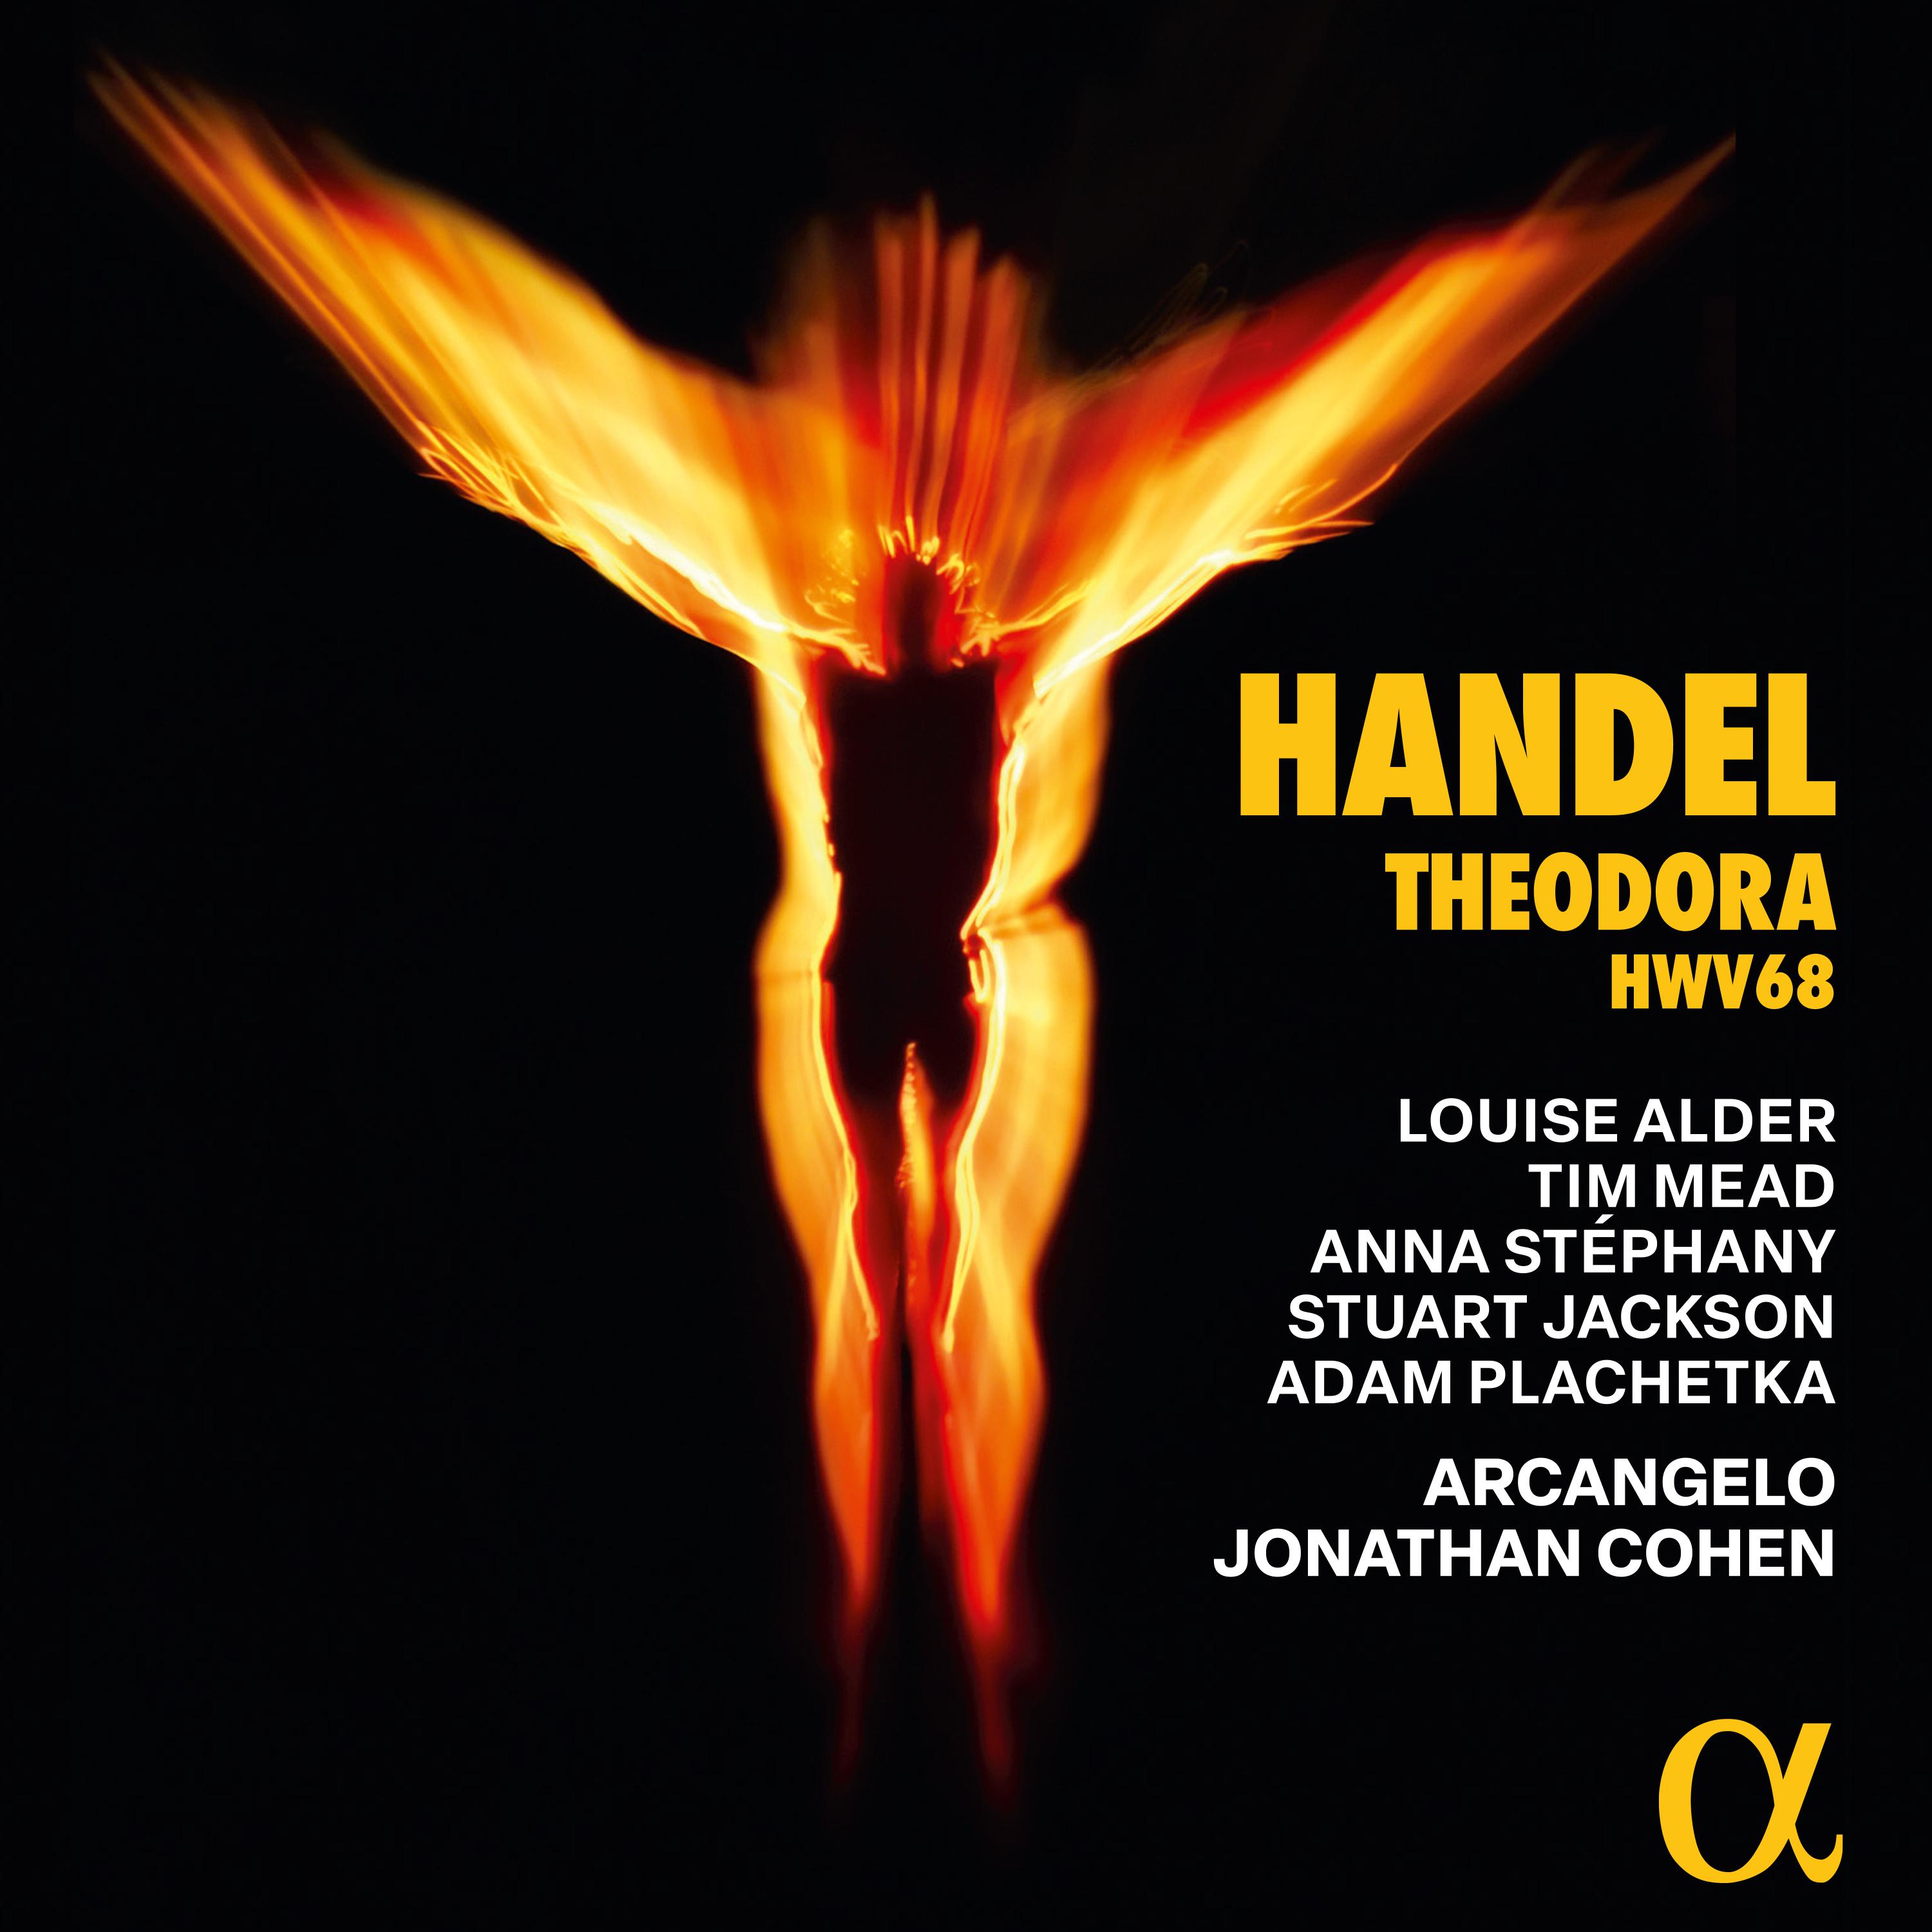 Arcangelo - Theodora, HWV 68, Overture: Grave - Allegro